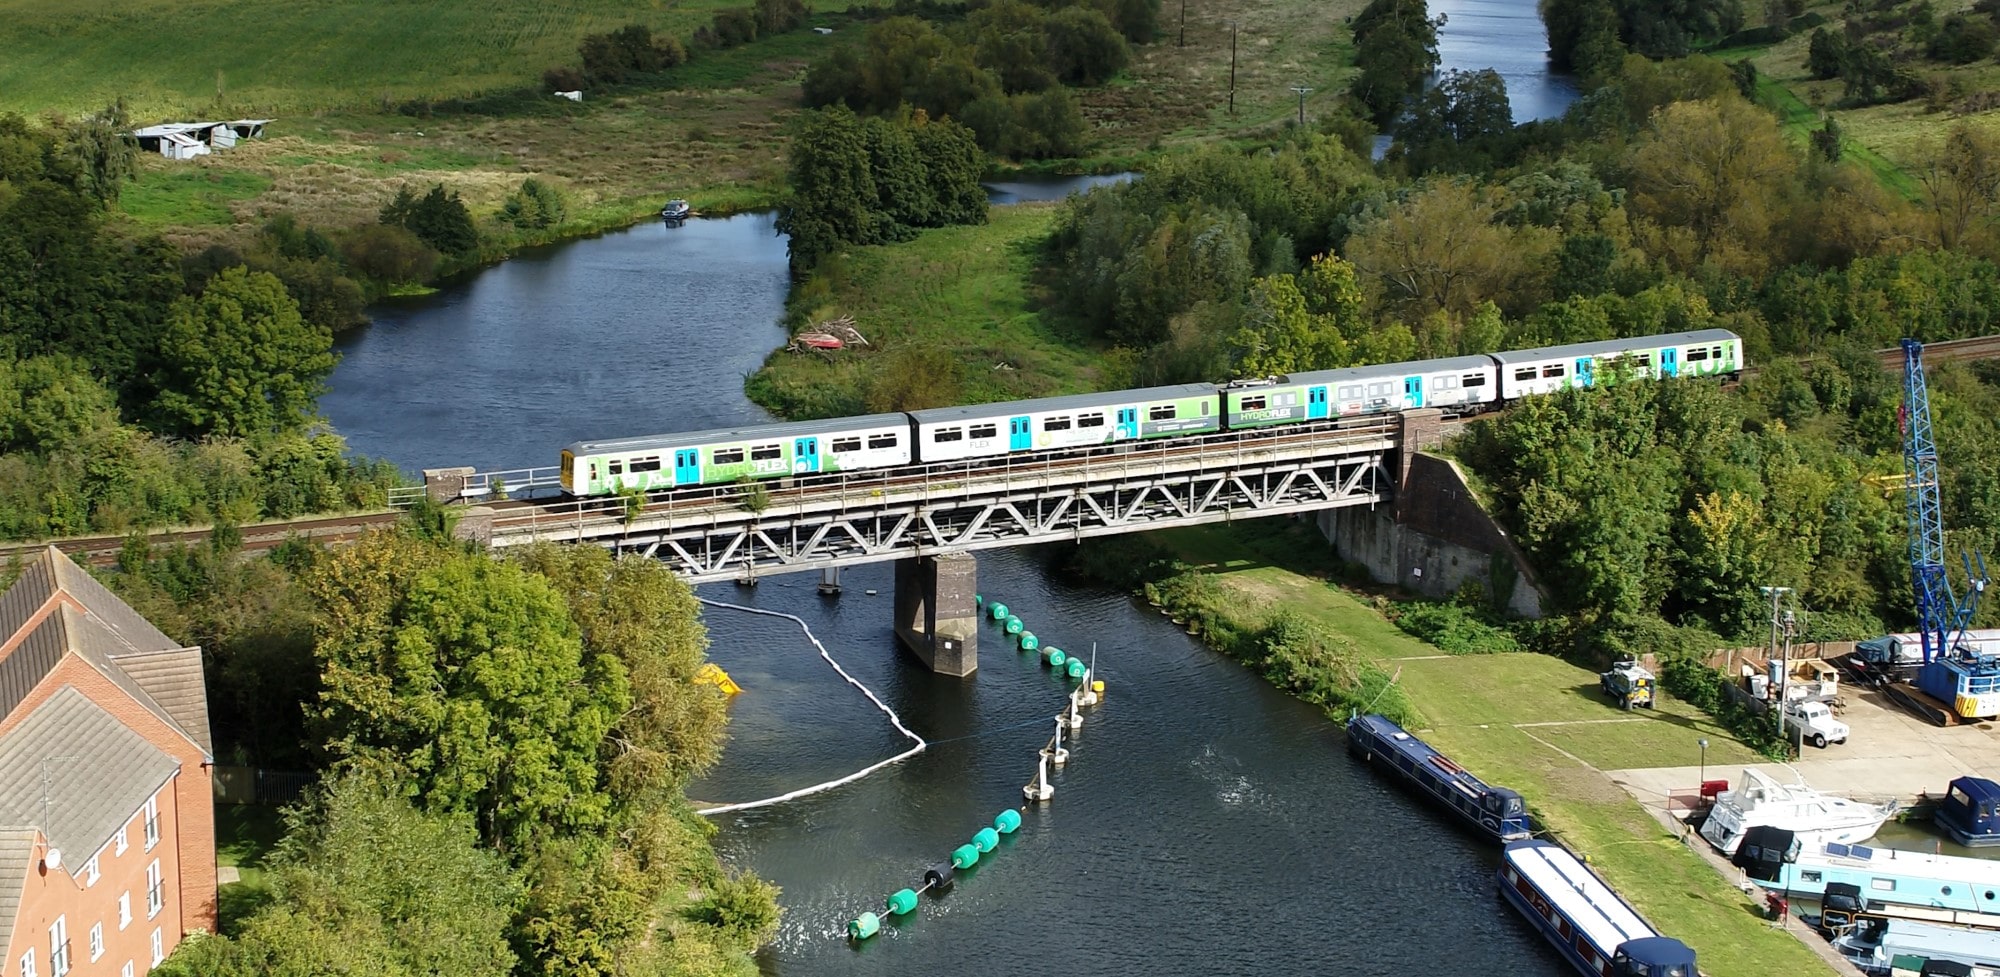 Drone shot of HydroFlex train on a bridge over a river